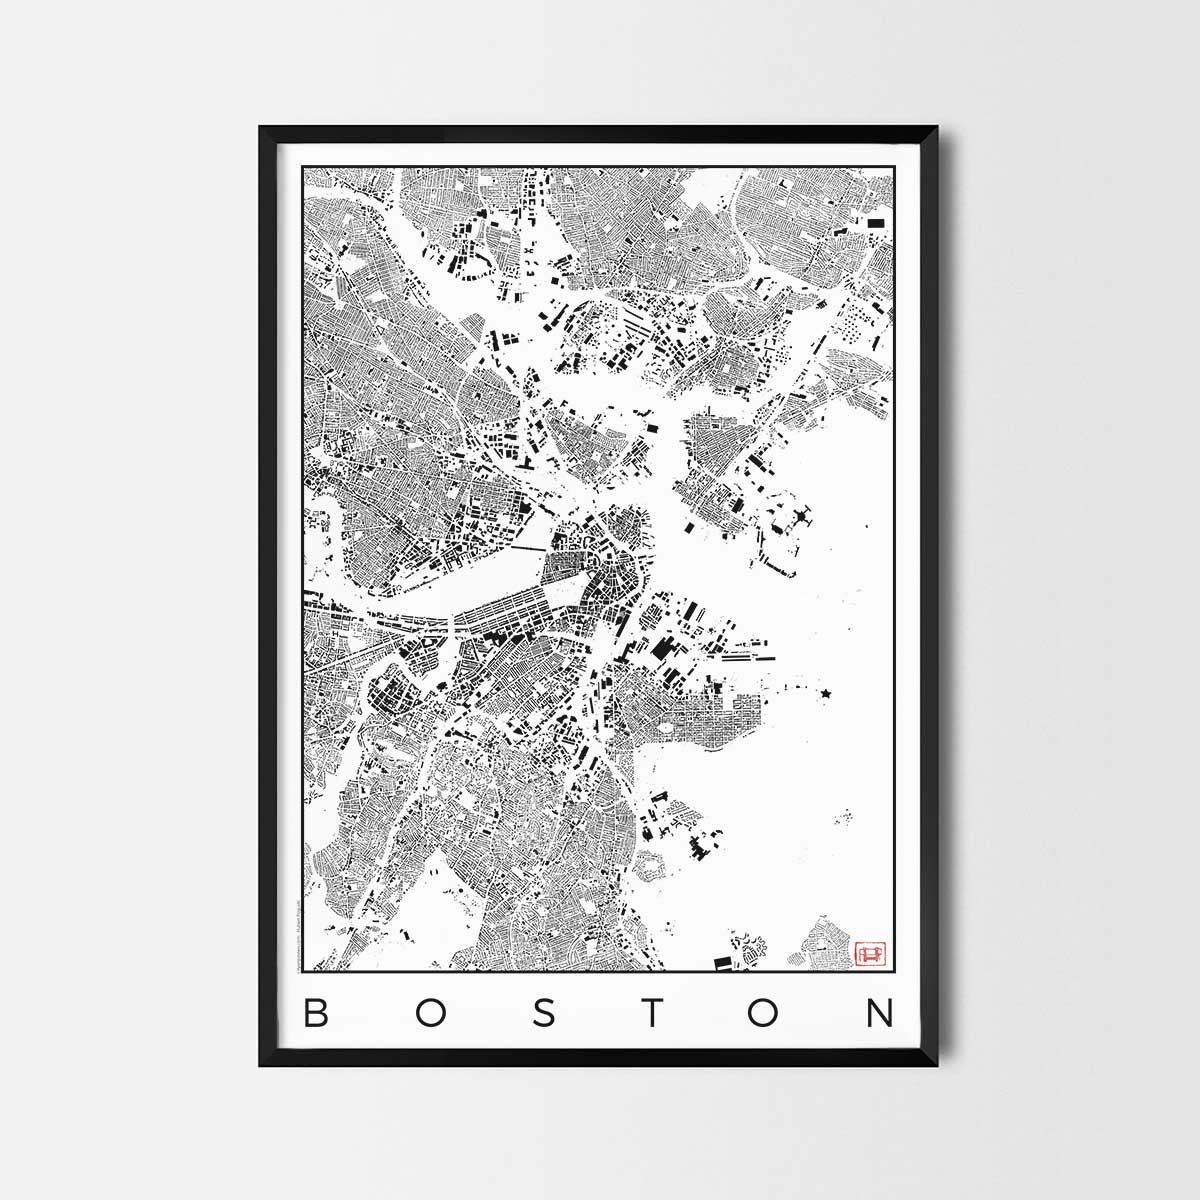 Boston Map Poster schwarzplan Urban plan city map art posters map posters city art prints city posters